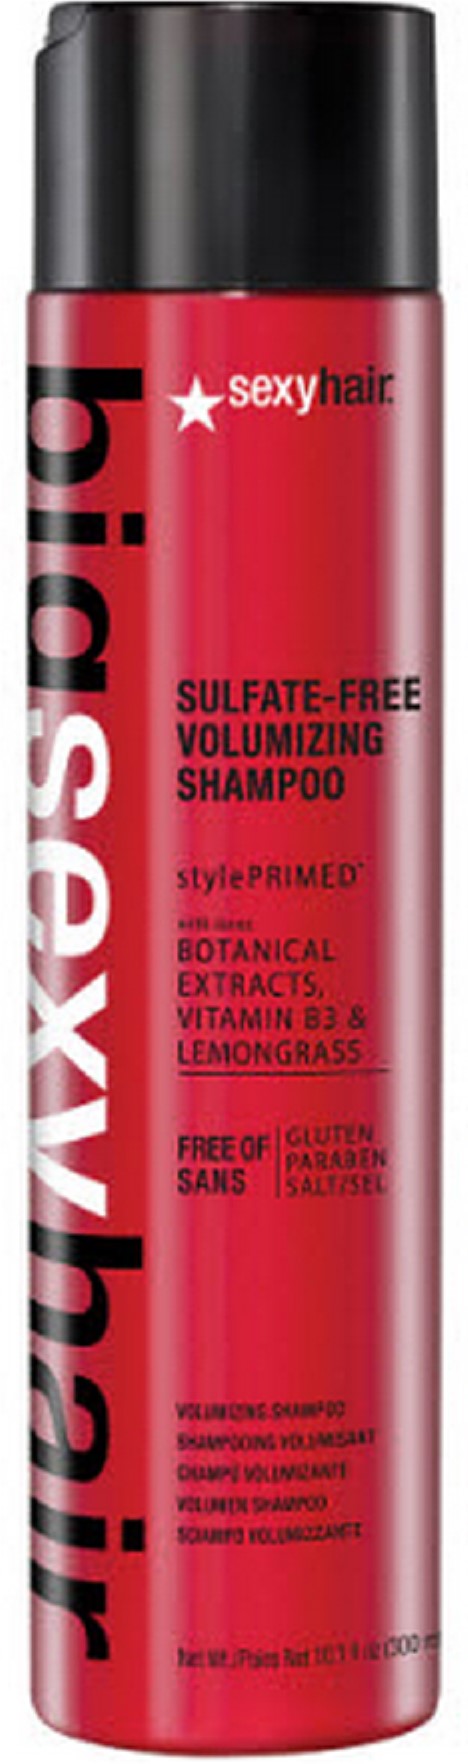 Sexy Hair Concepts Big Sexy Hair, Volumizing Shampoo, 10 oz (Pack of 3) - image 1 of 1